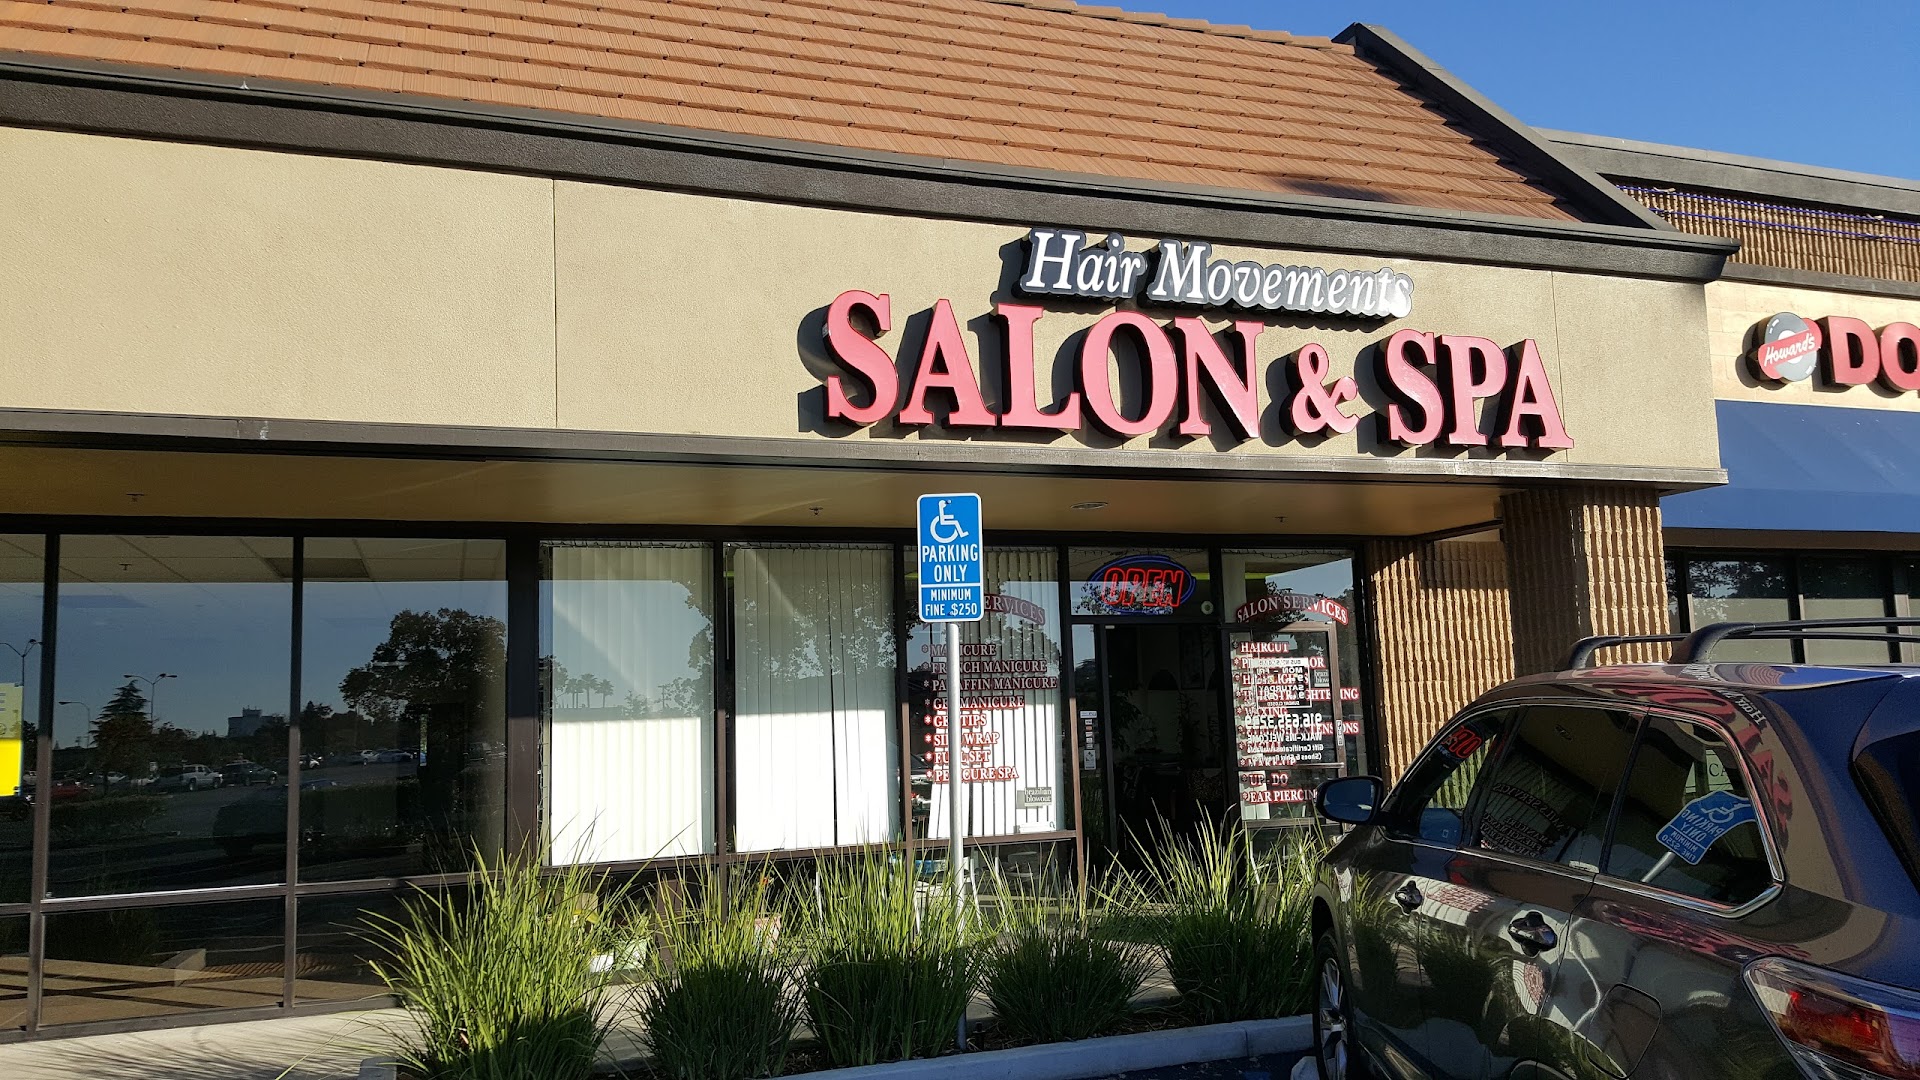 Hair Movements Salon & Spa